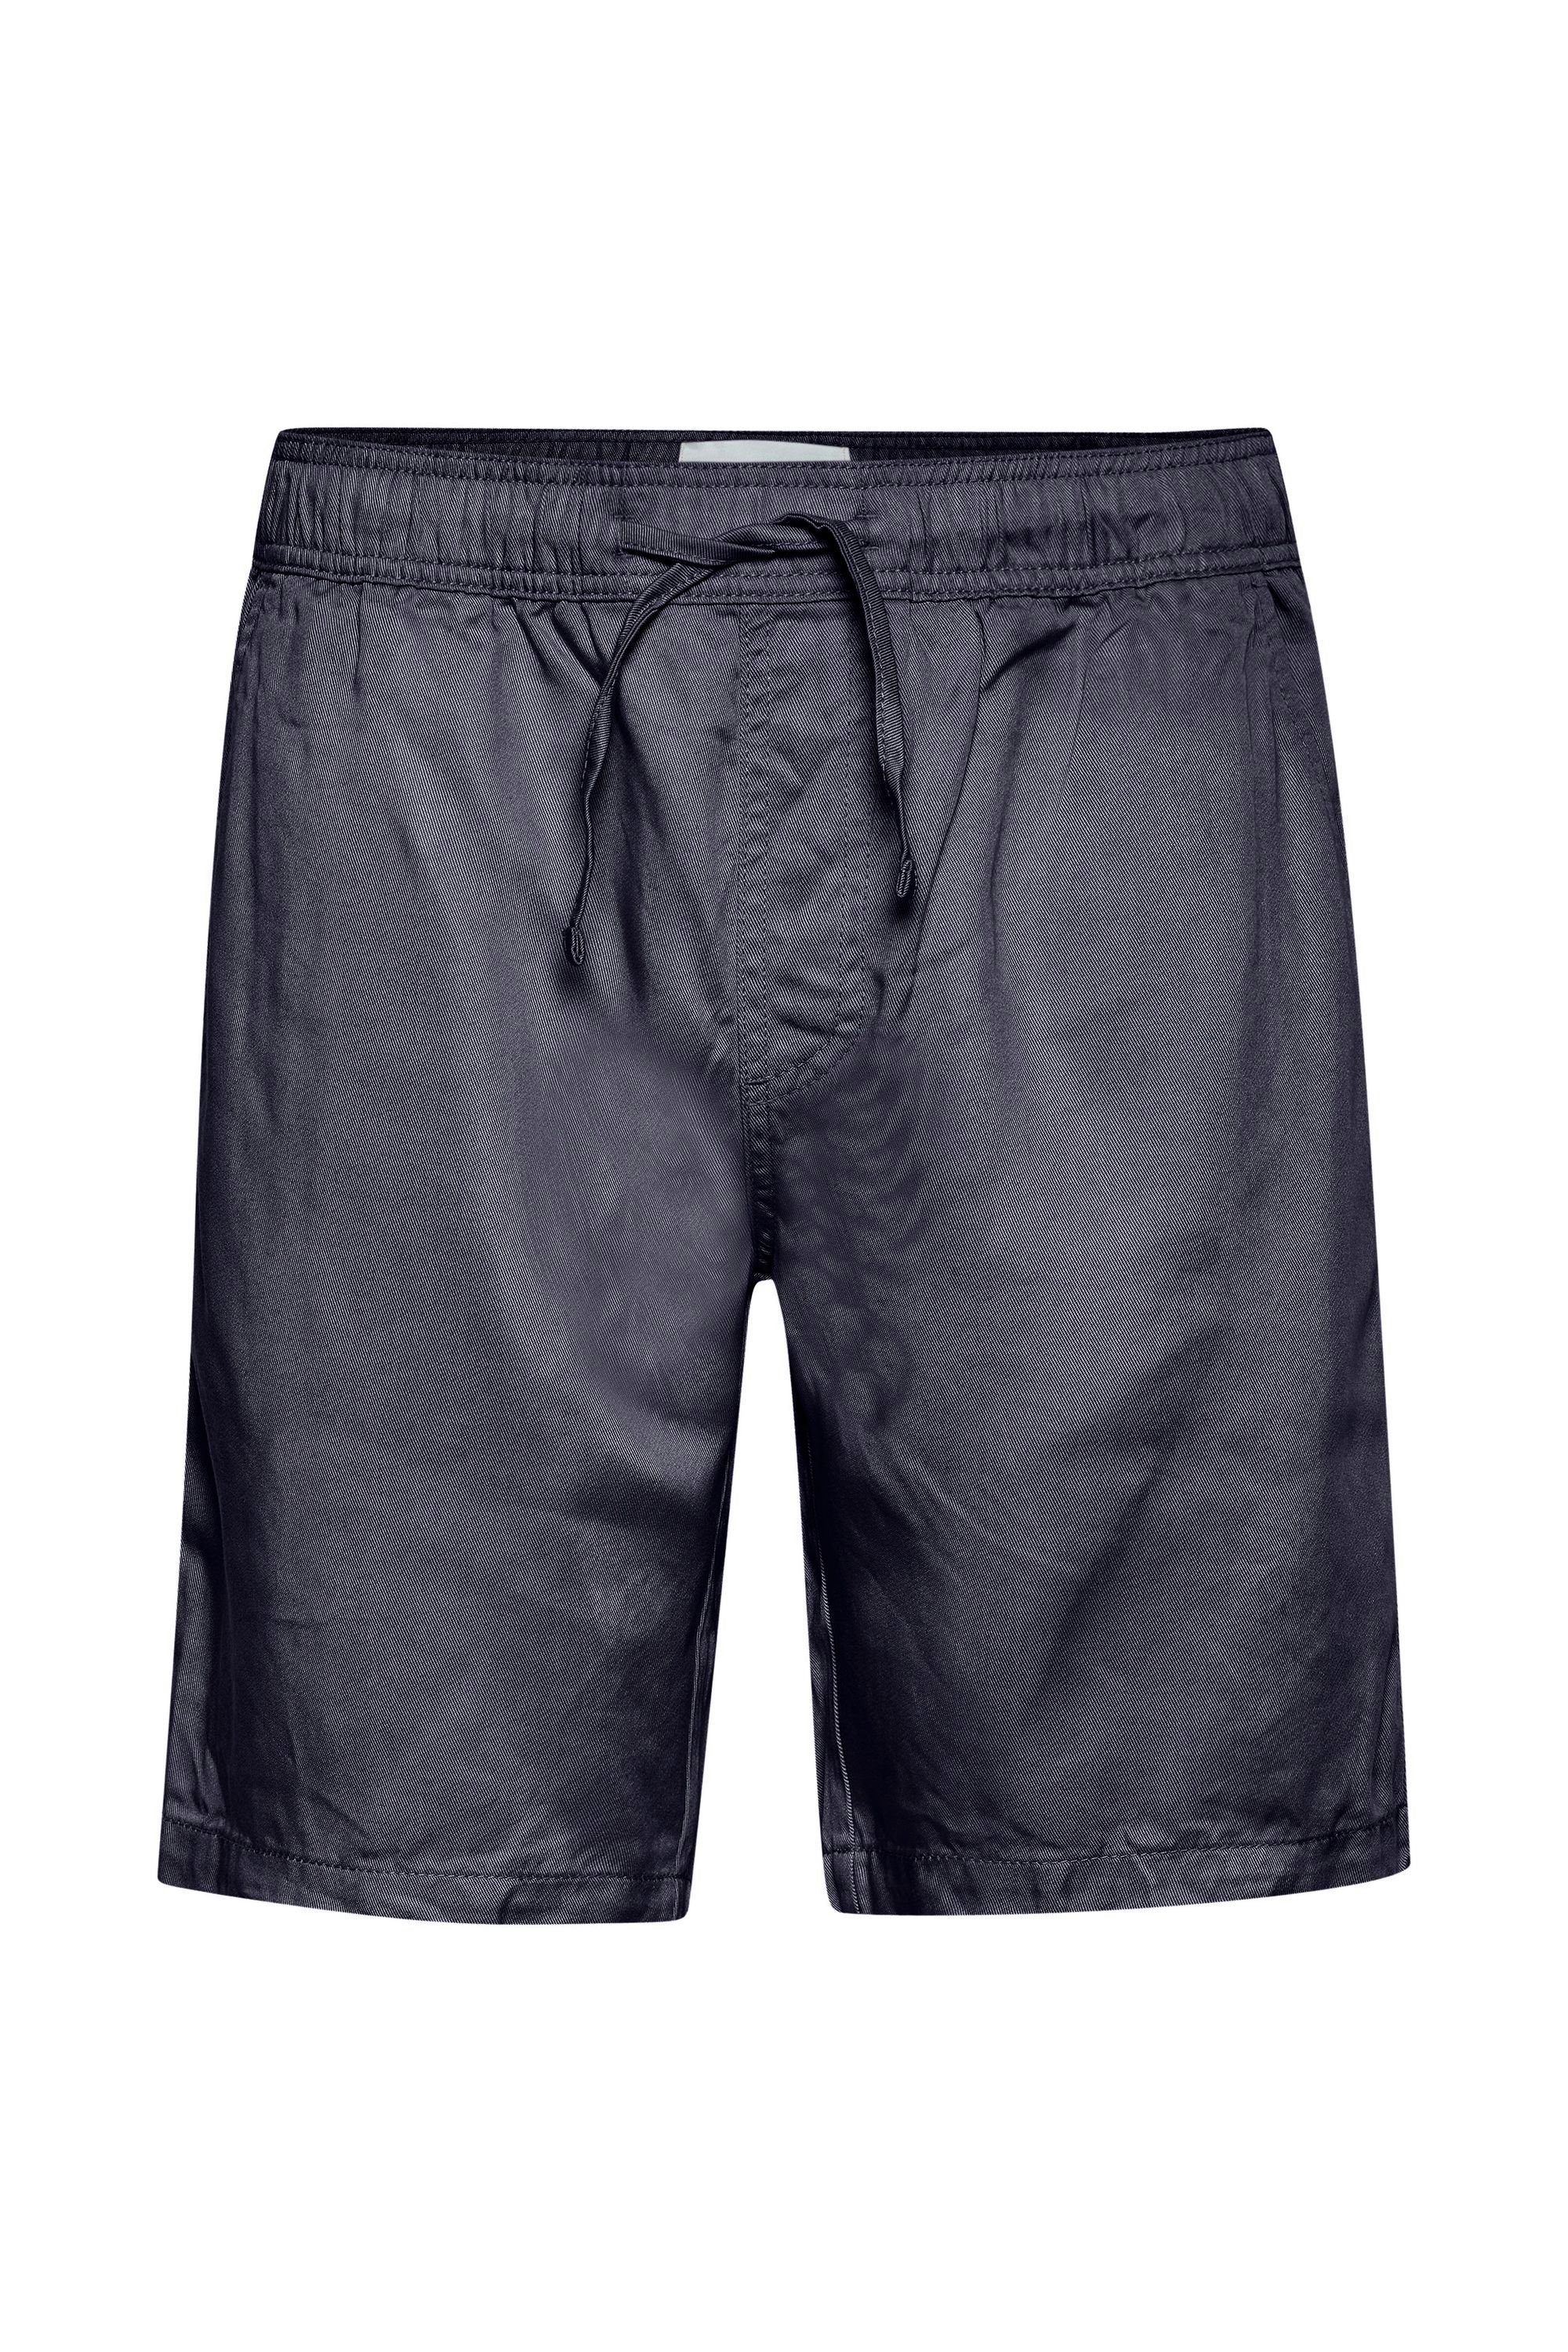 CFPhelix Casual Navy 20504306 Shorts (193923) - Blazer Friday